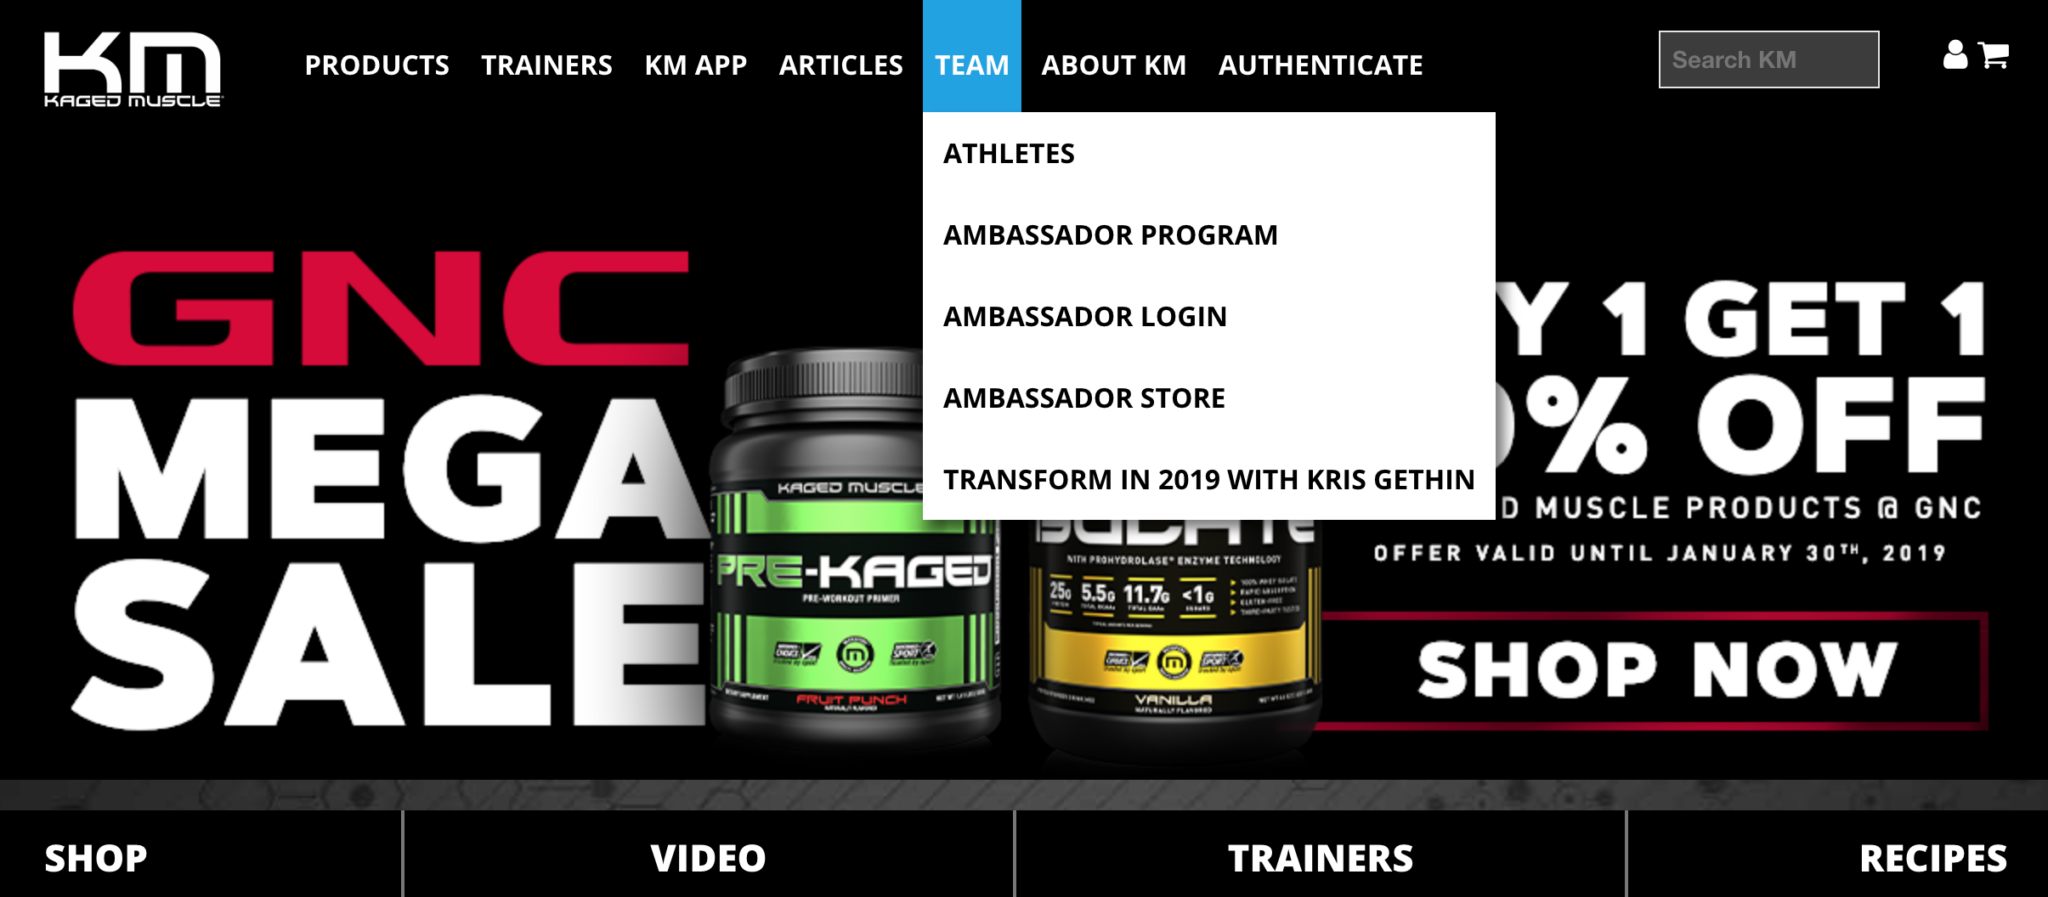 Kaged Muscle website ambassador options